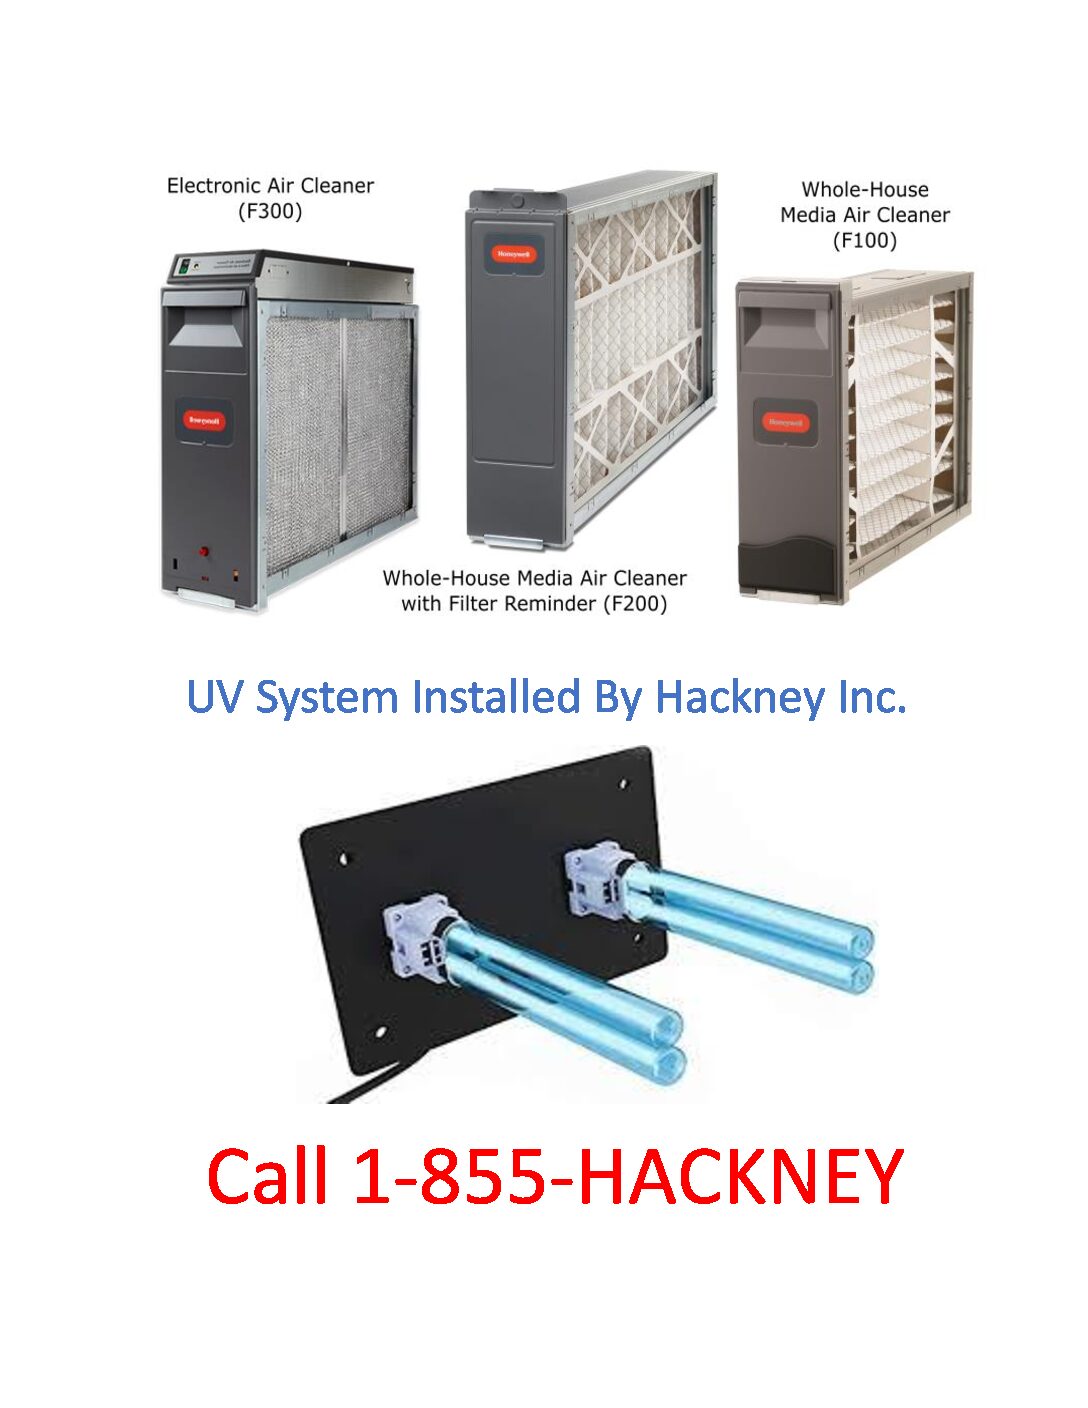 UV System Installed By Hackney Inc